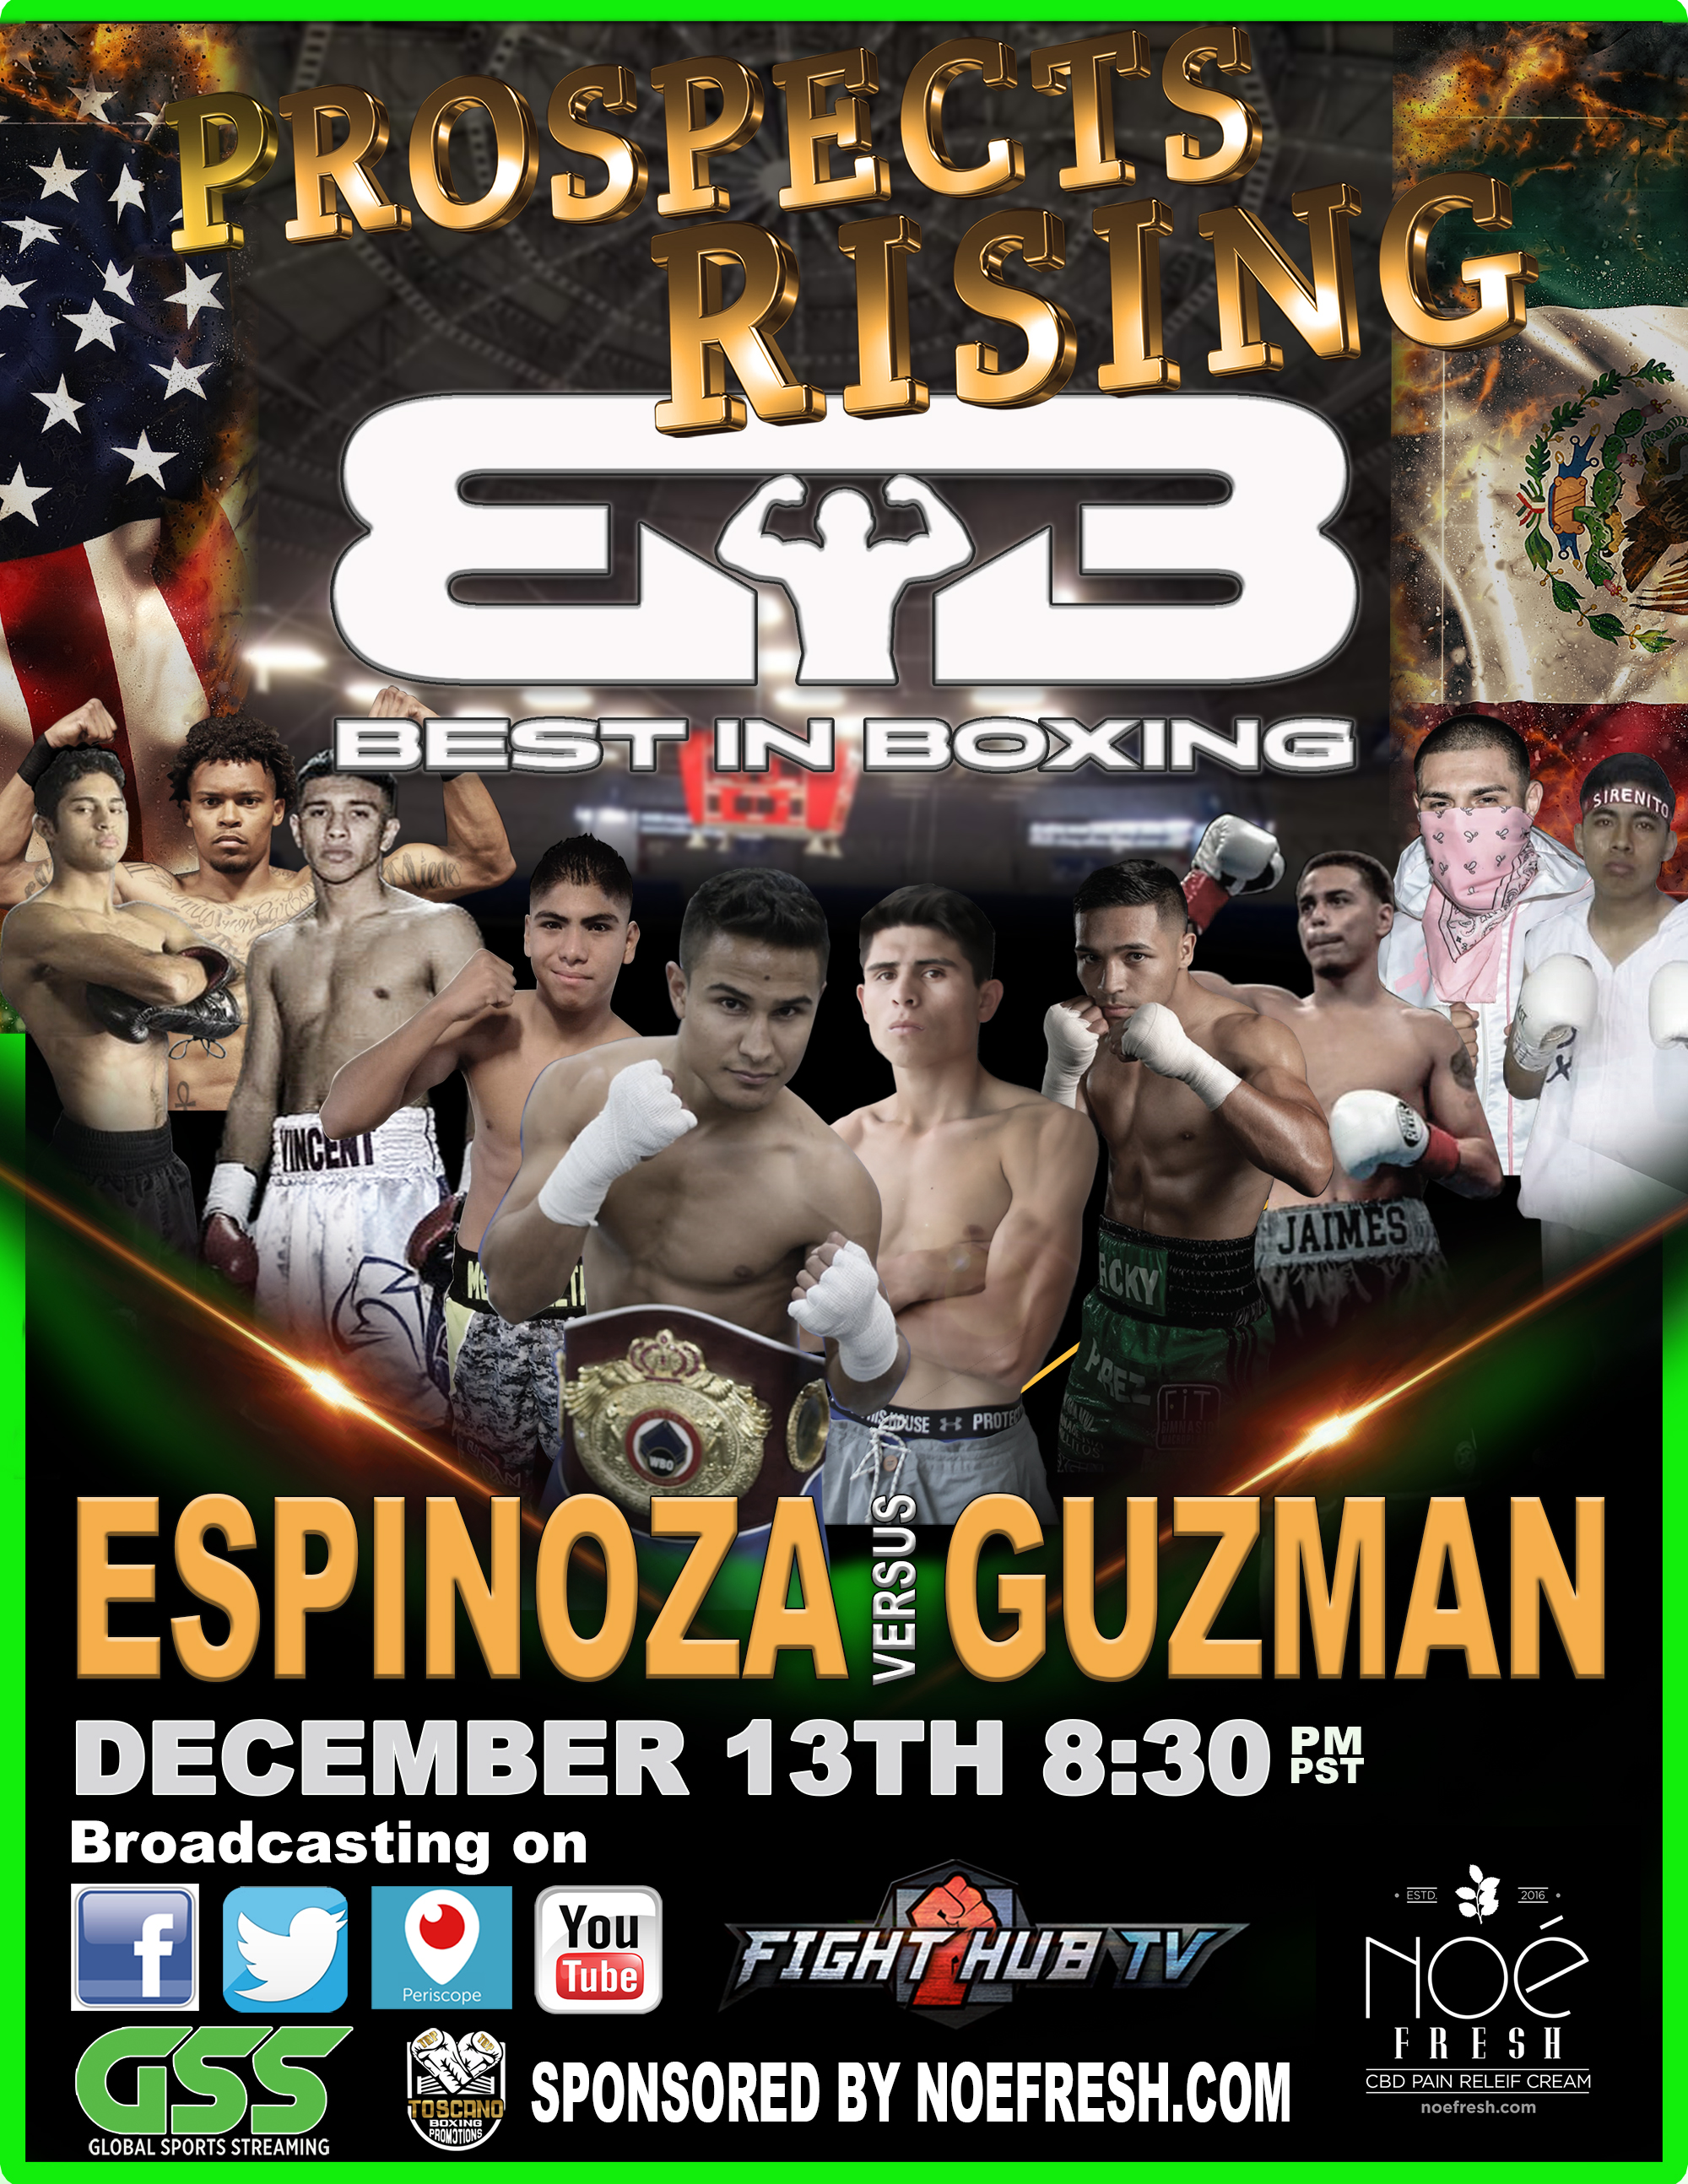 Best in Boxing Back December 13 Live on Fight Hub TV on Youtube